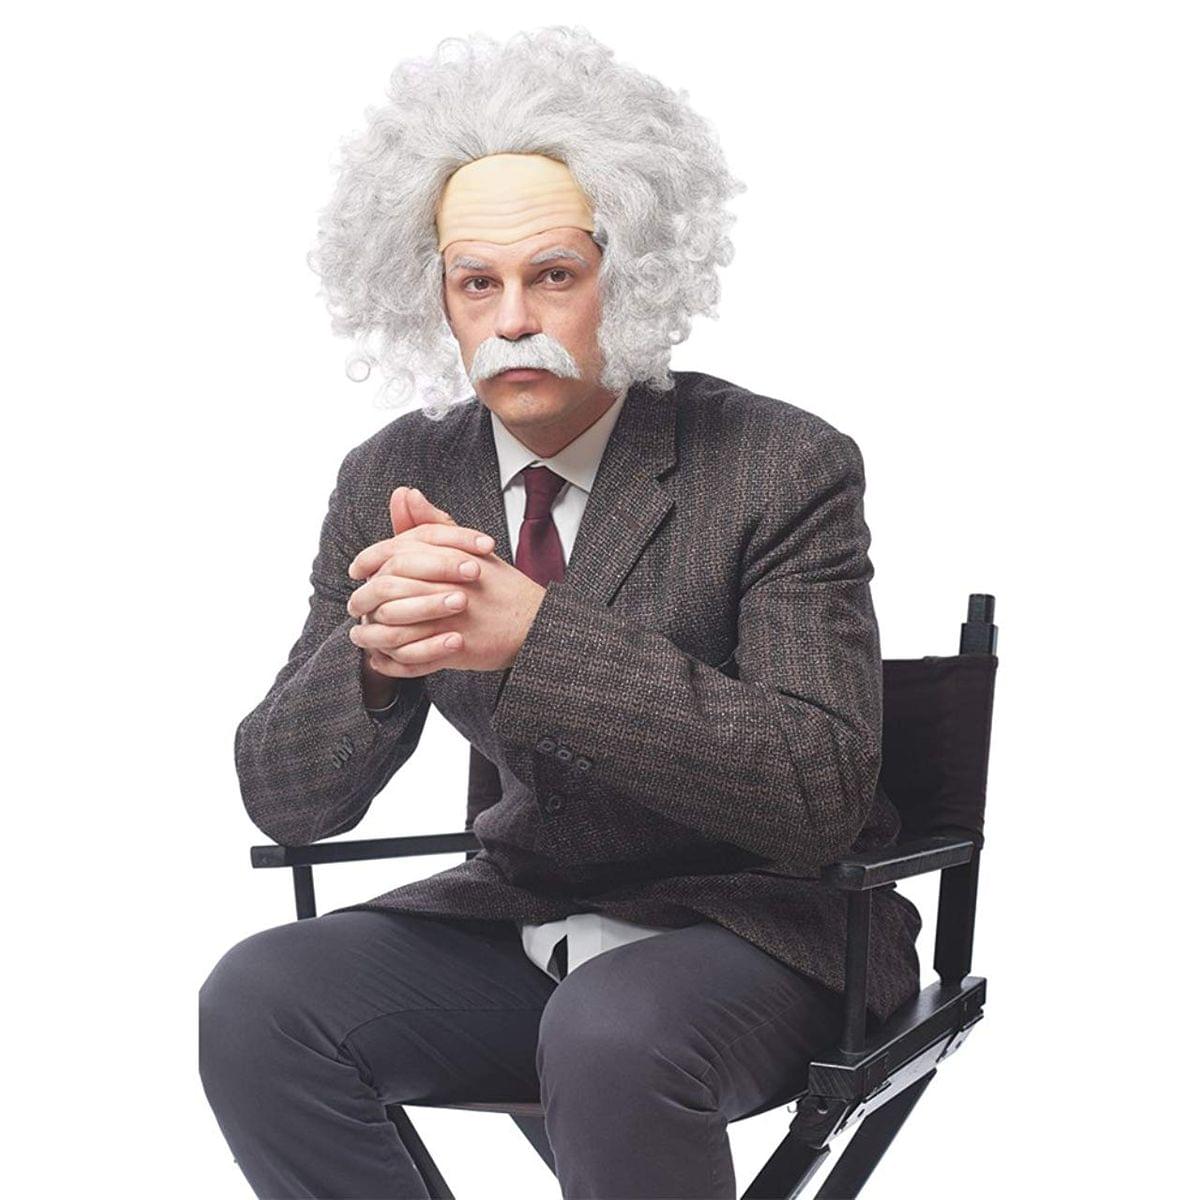 Genius Men's Costume Wig with Moustache - Grey